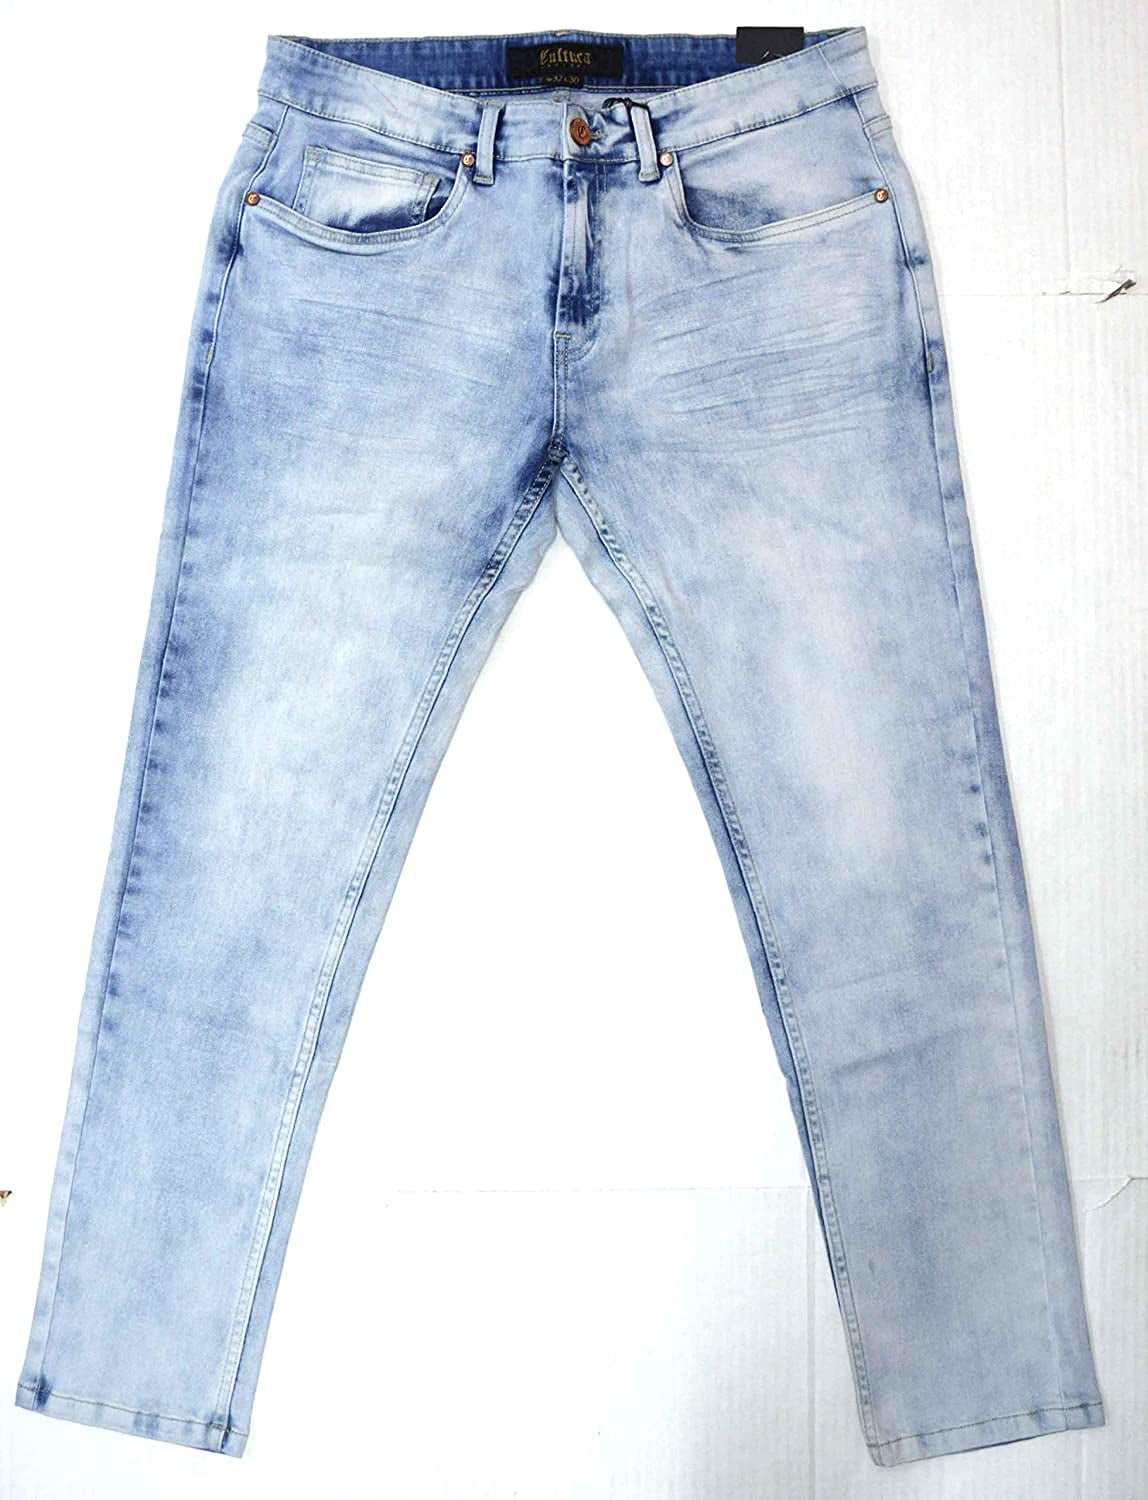 CULTURA Men's Jeans Stretch Washed Distressed Fashion Denim Flex ...